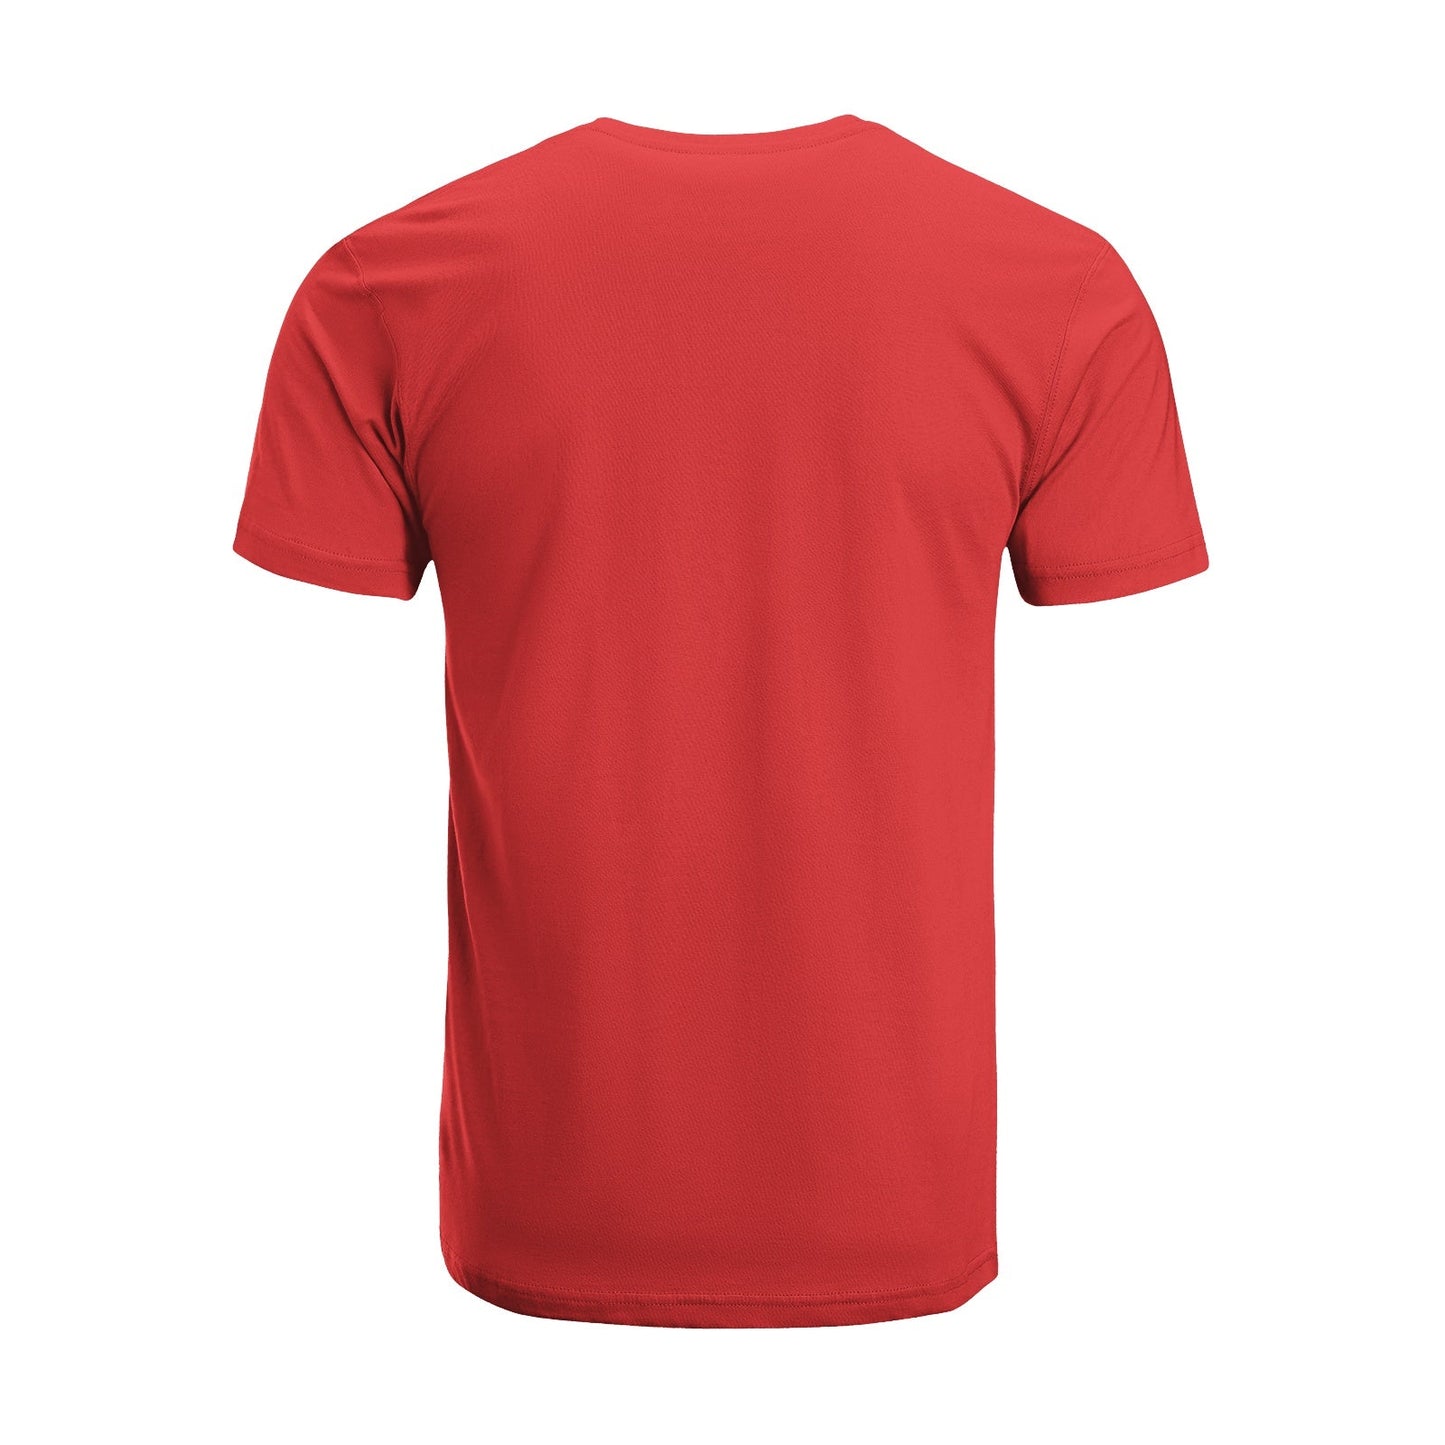 Unisex Short Sleeve Crew Neck Cotton Jersey T-Shirt USA 15